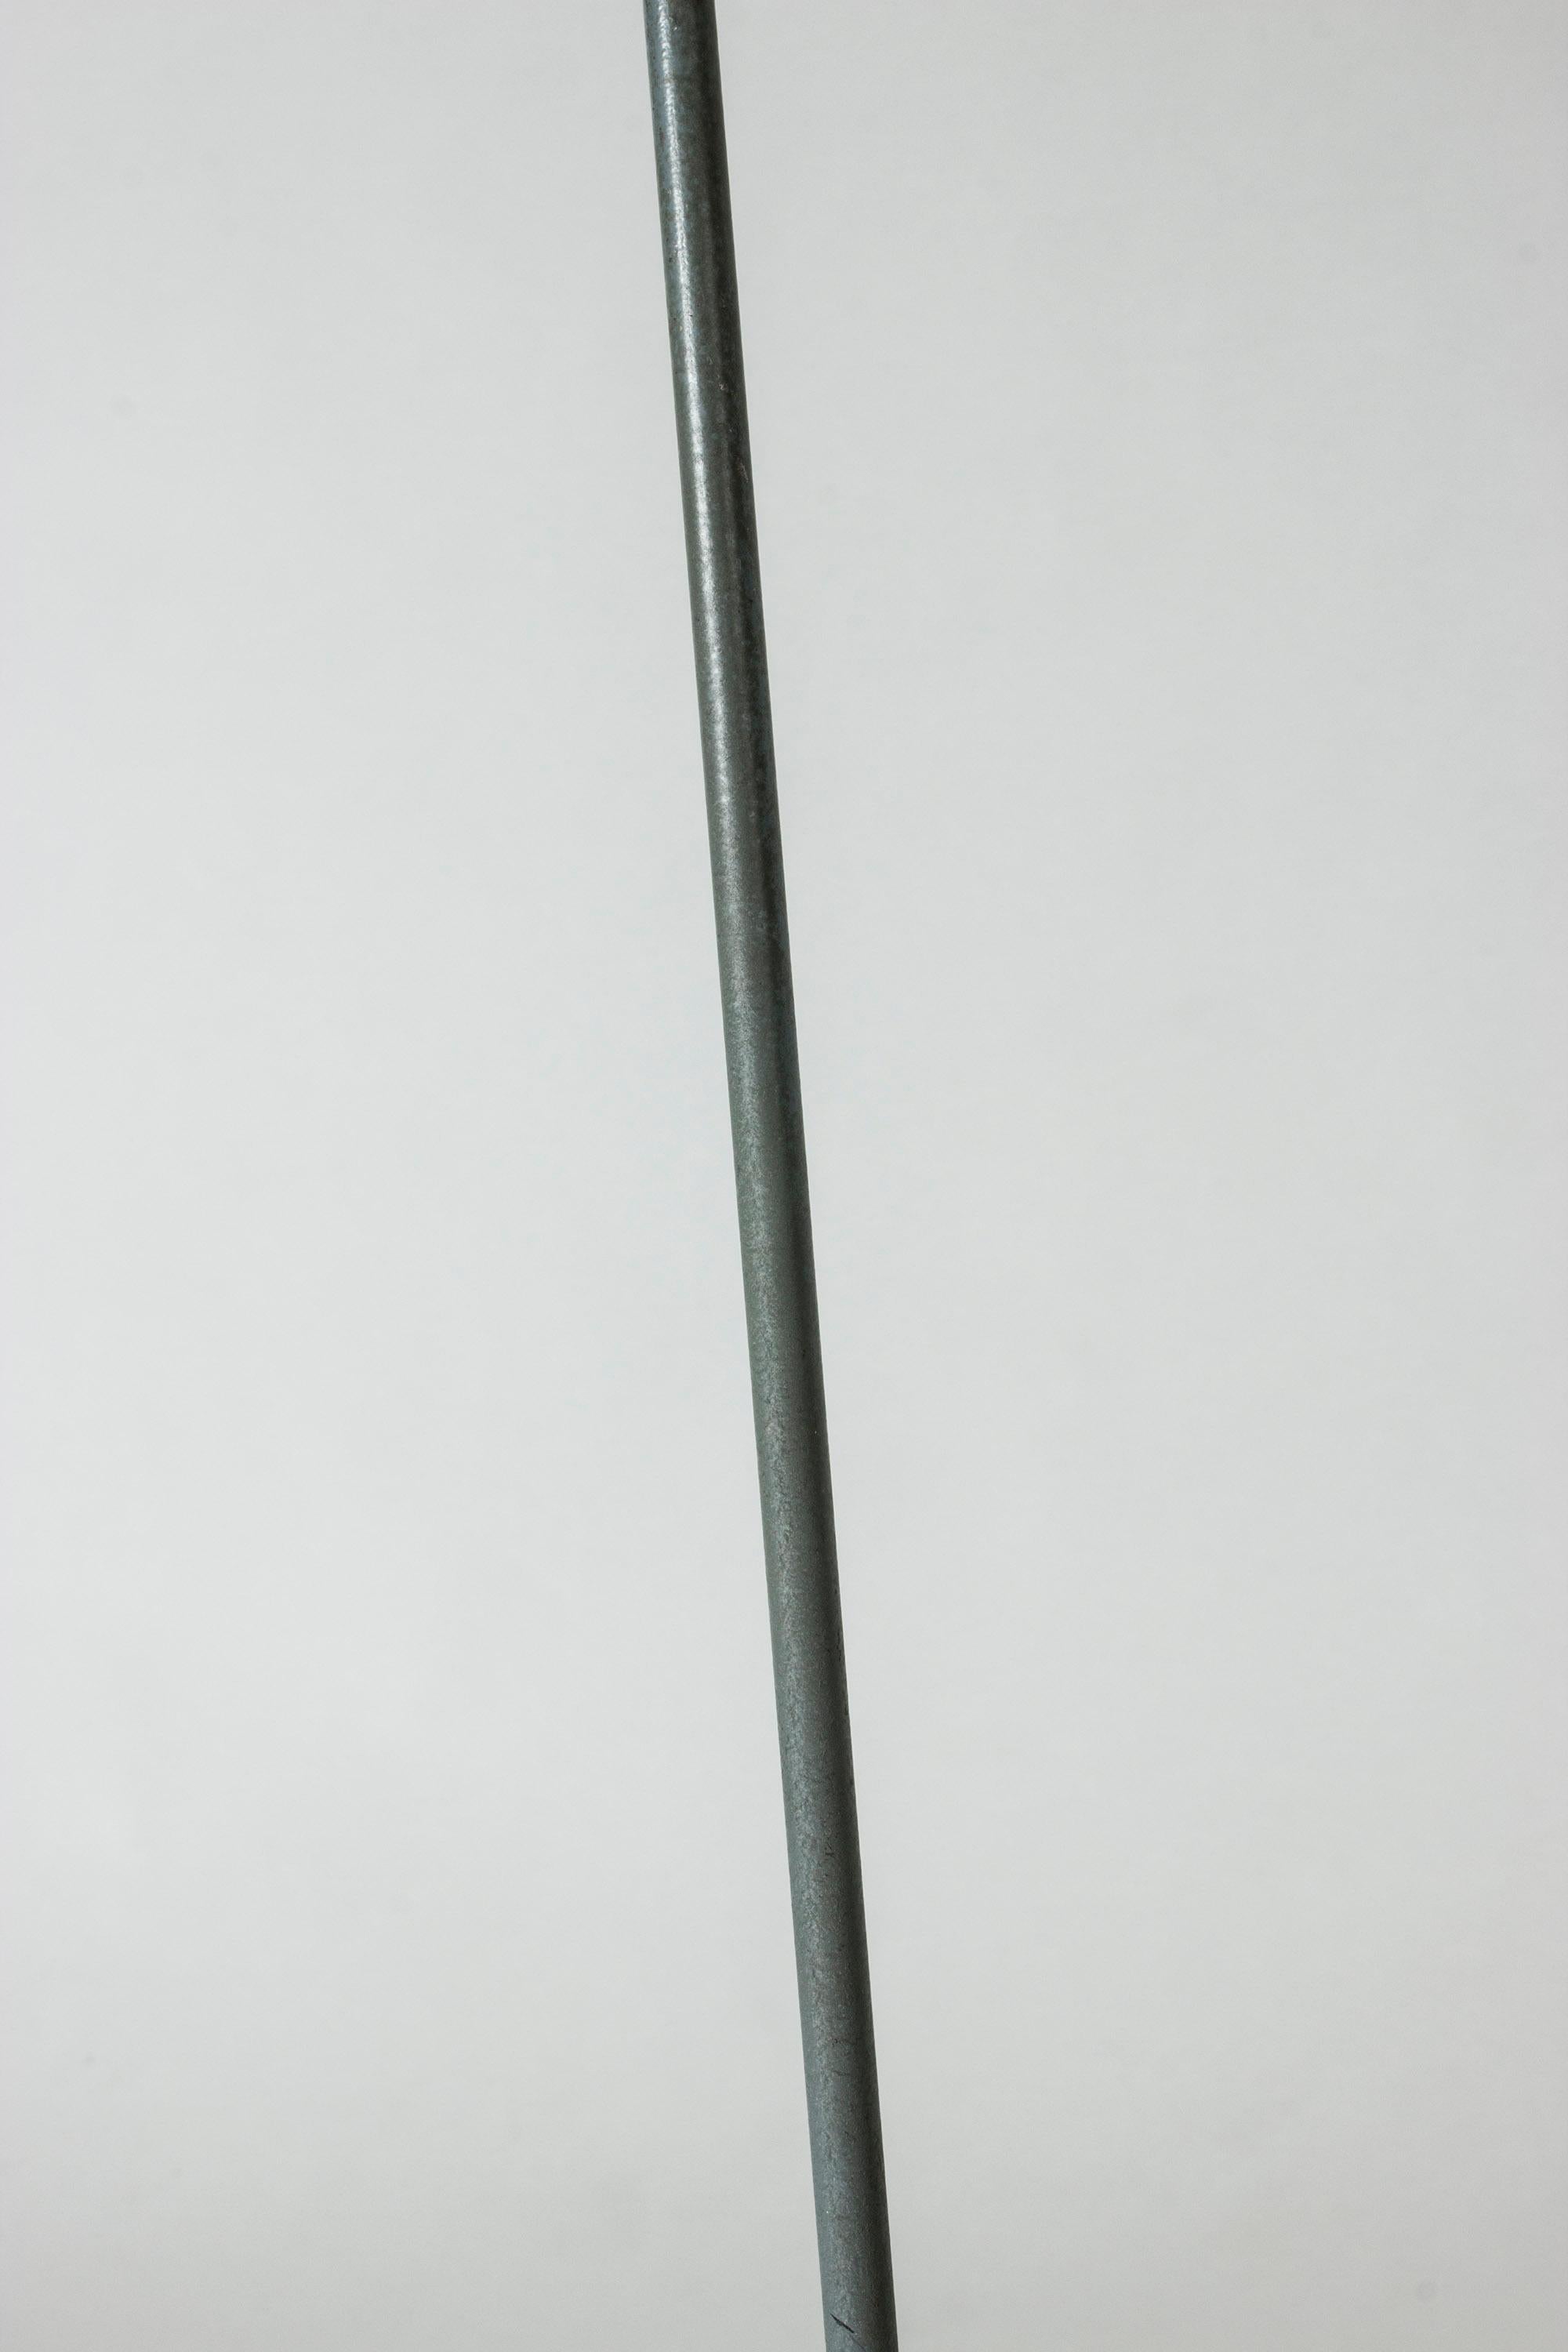 Mid-20th Century Midcentury Floor Lamp by Hans Bergström